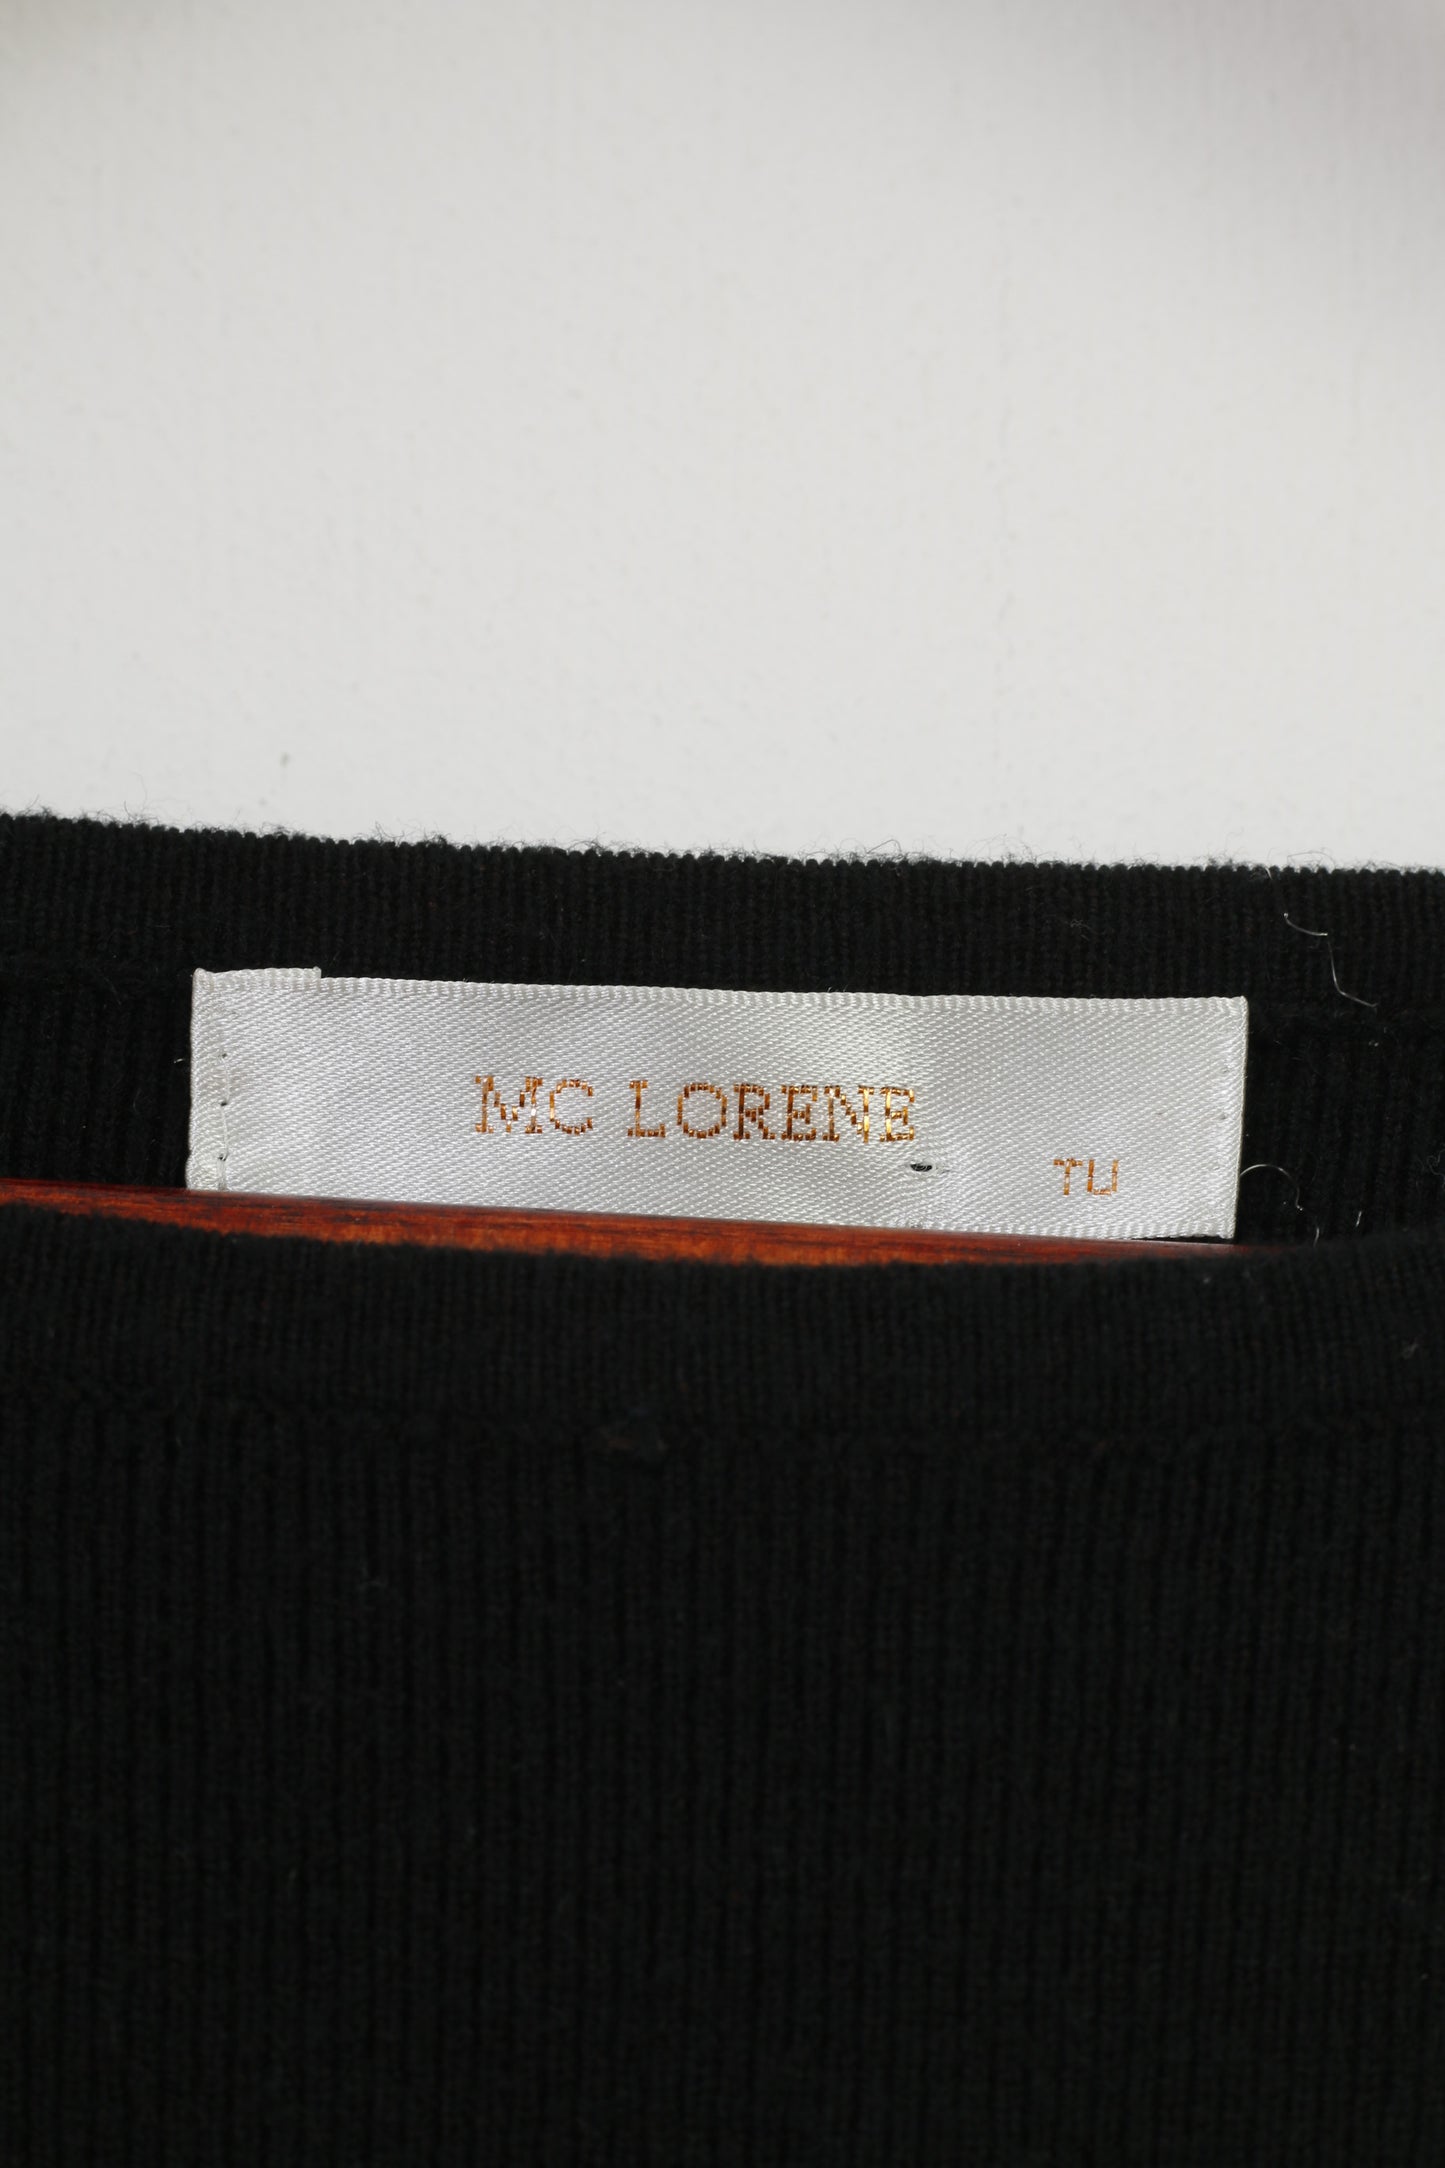 Mc Lorene Woman S Dress Black Long Sleeve Tight Stretch Top